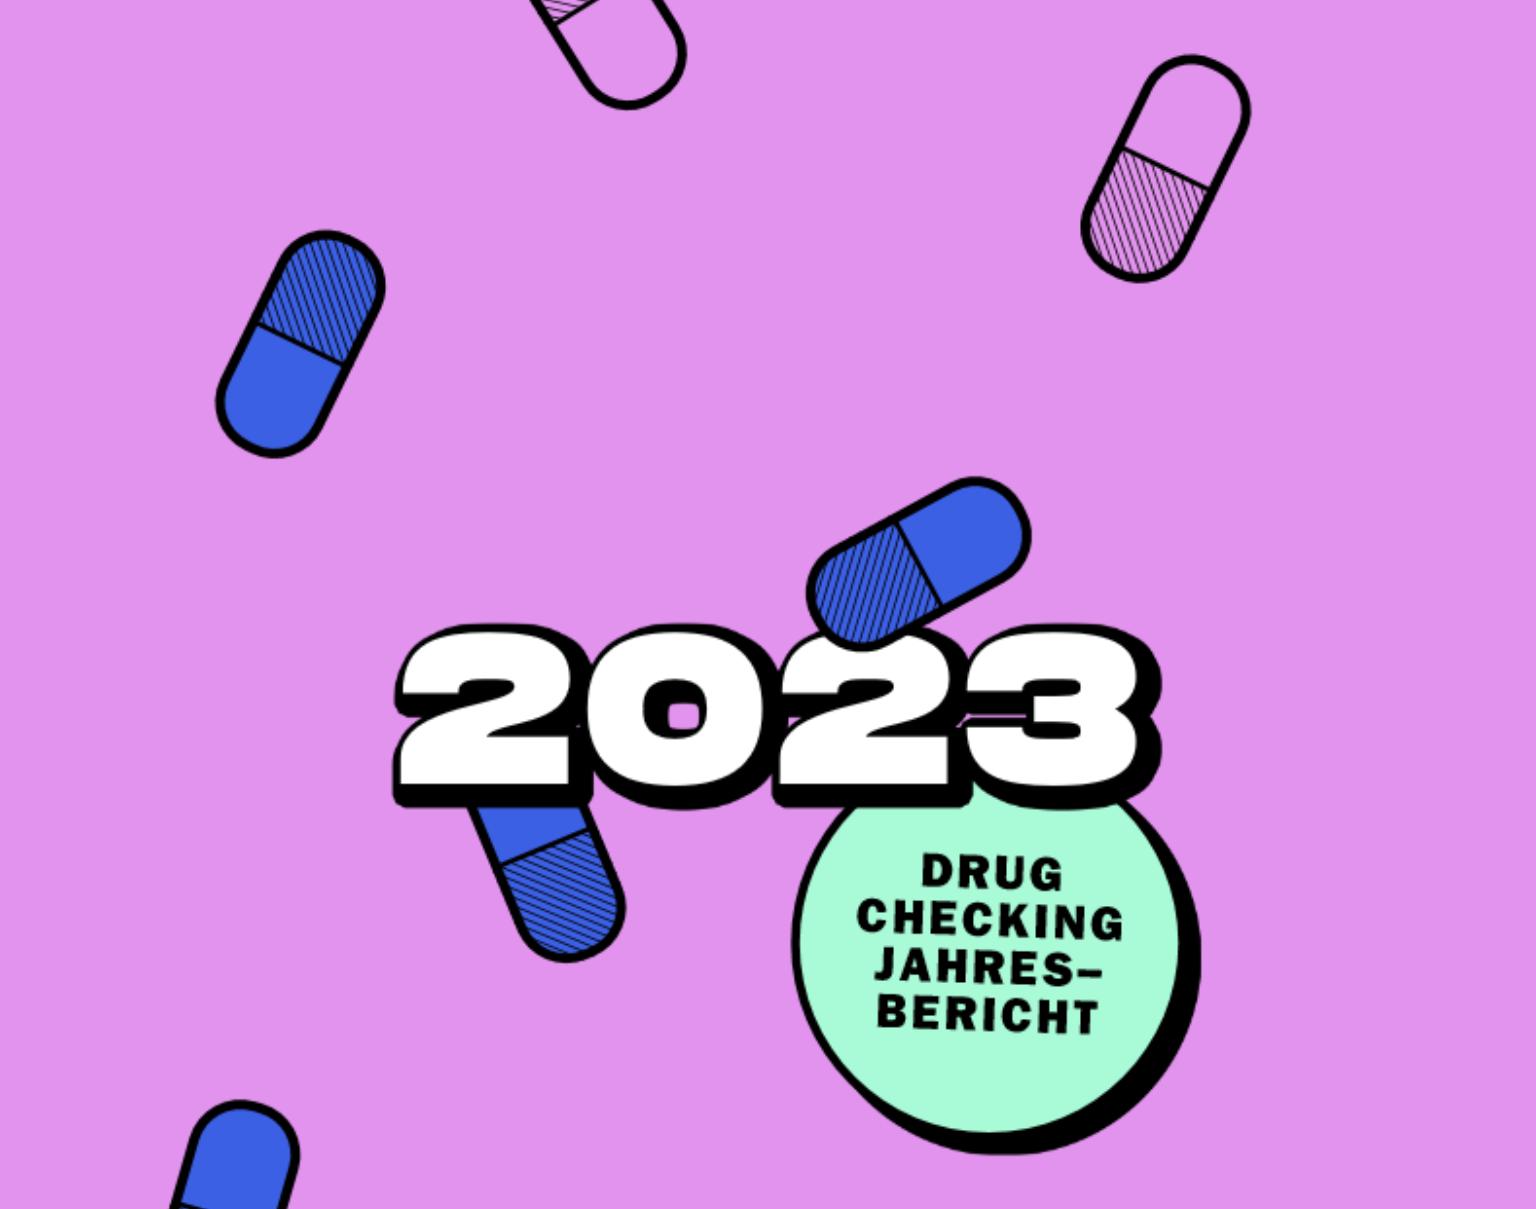 Checkit! Drug Checking Jahresbericht 2023